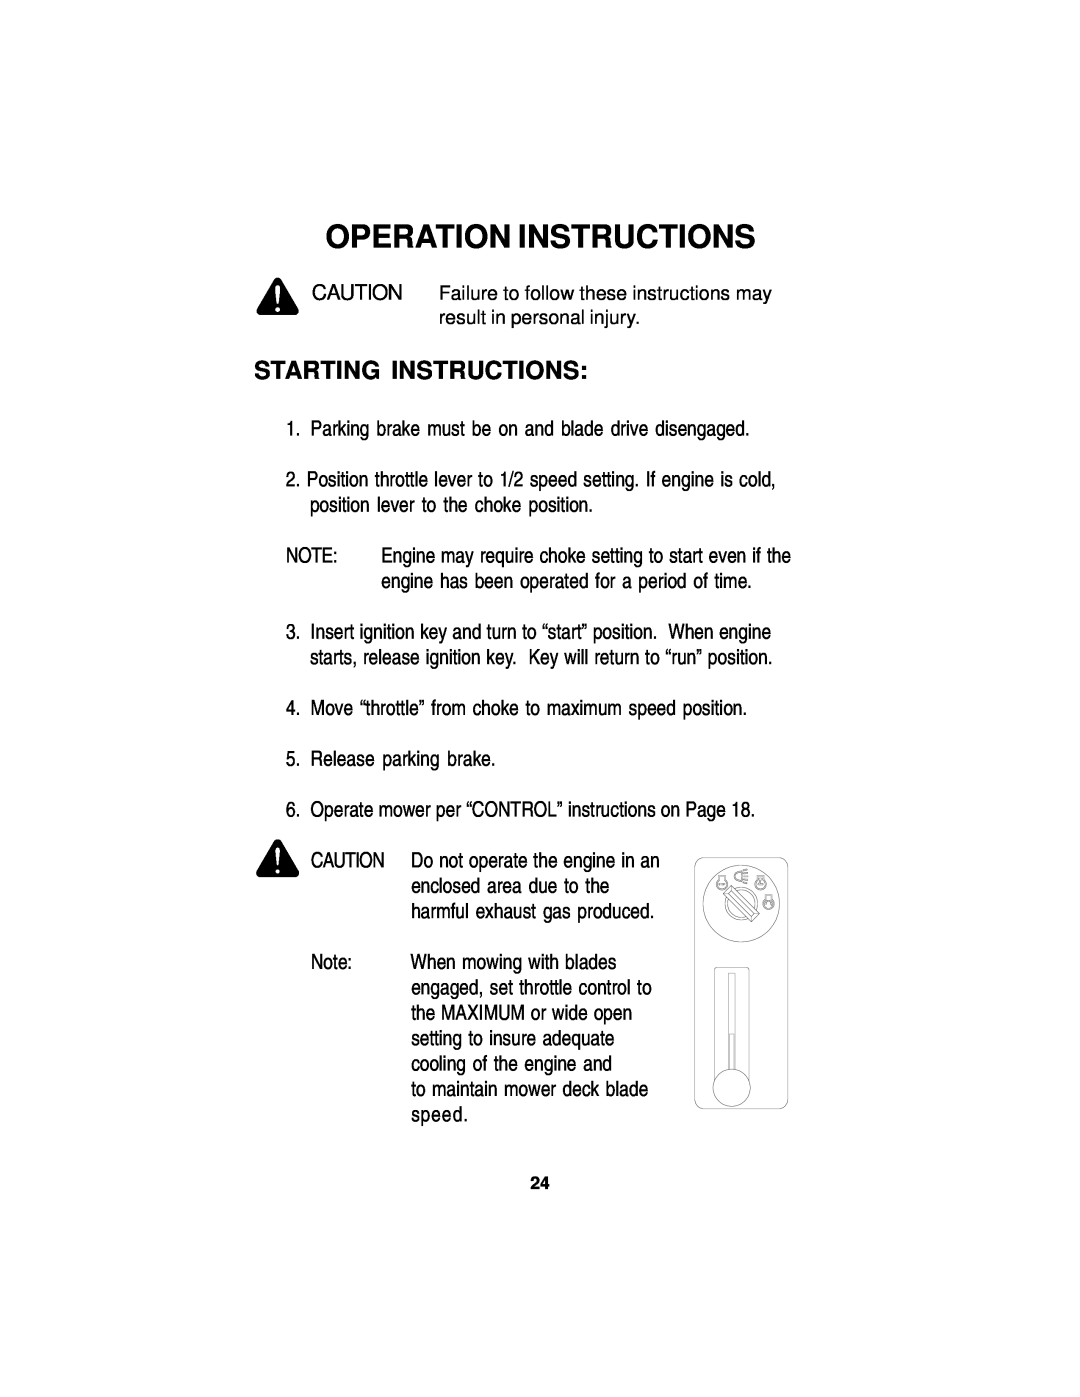 Dixon 14295-0804 manual Starting Instructions, Operation Instructions 